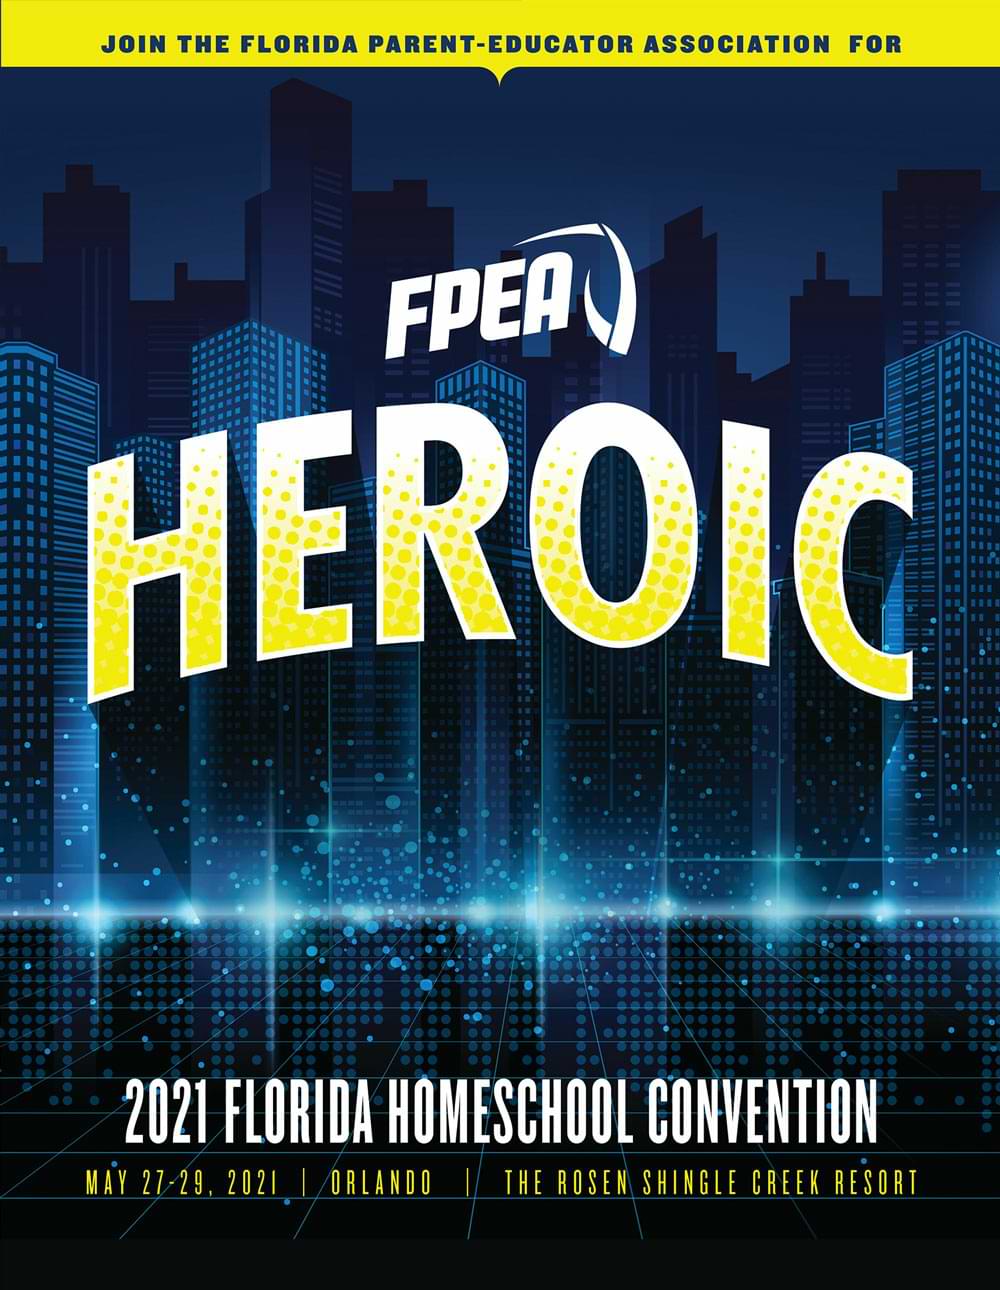 2021 Florida Homeschool Convention Advertisement